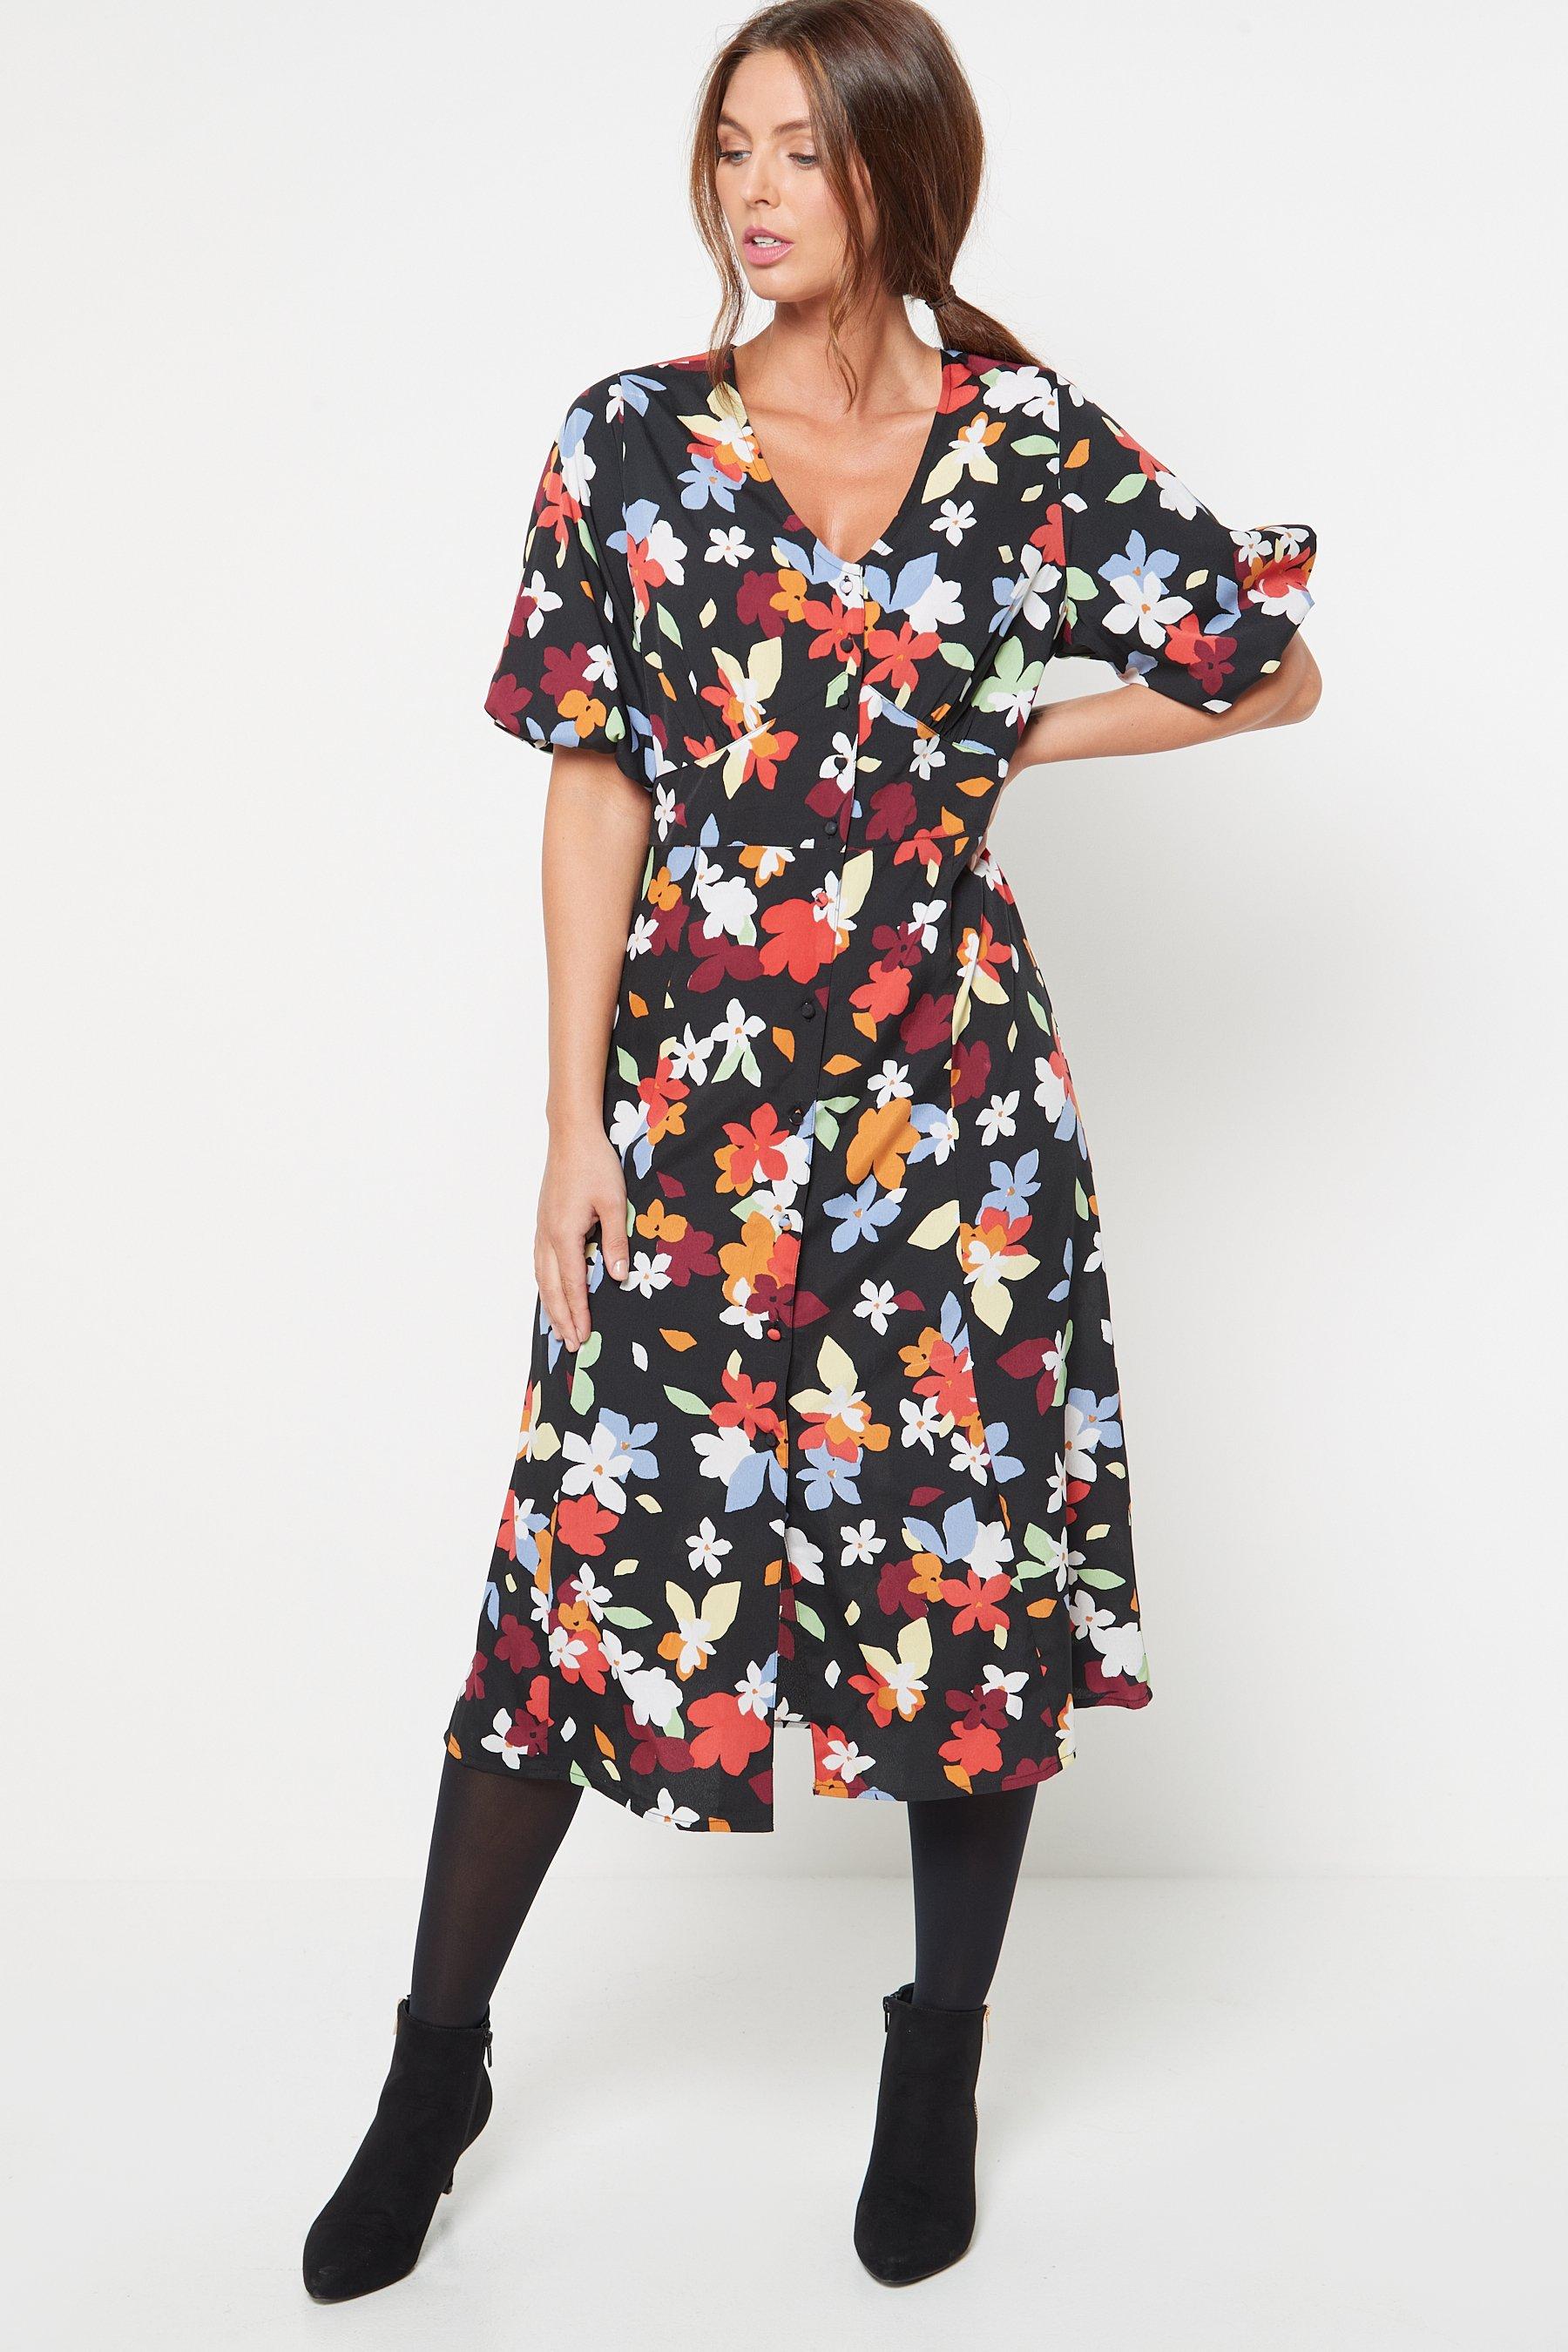 retro puff sleeve black floral dress - womens - size: 8